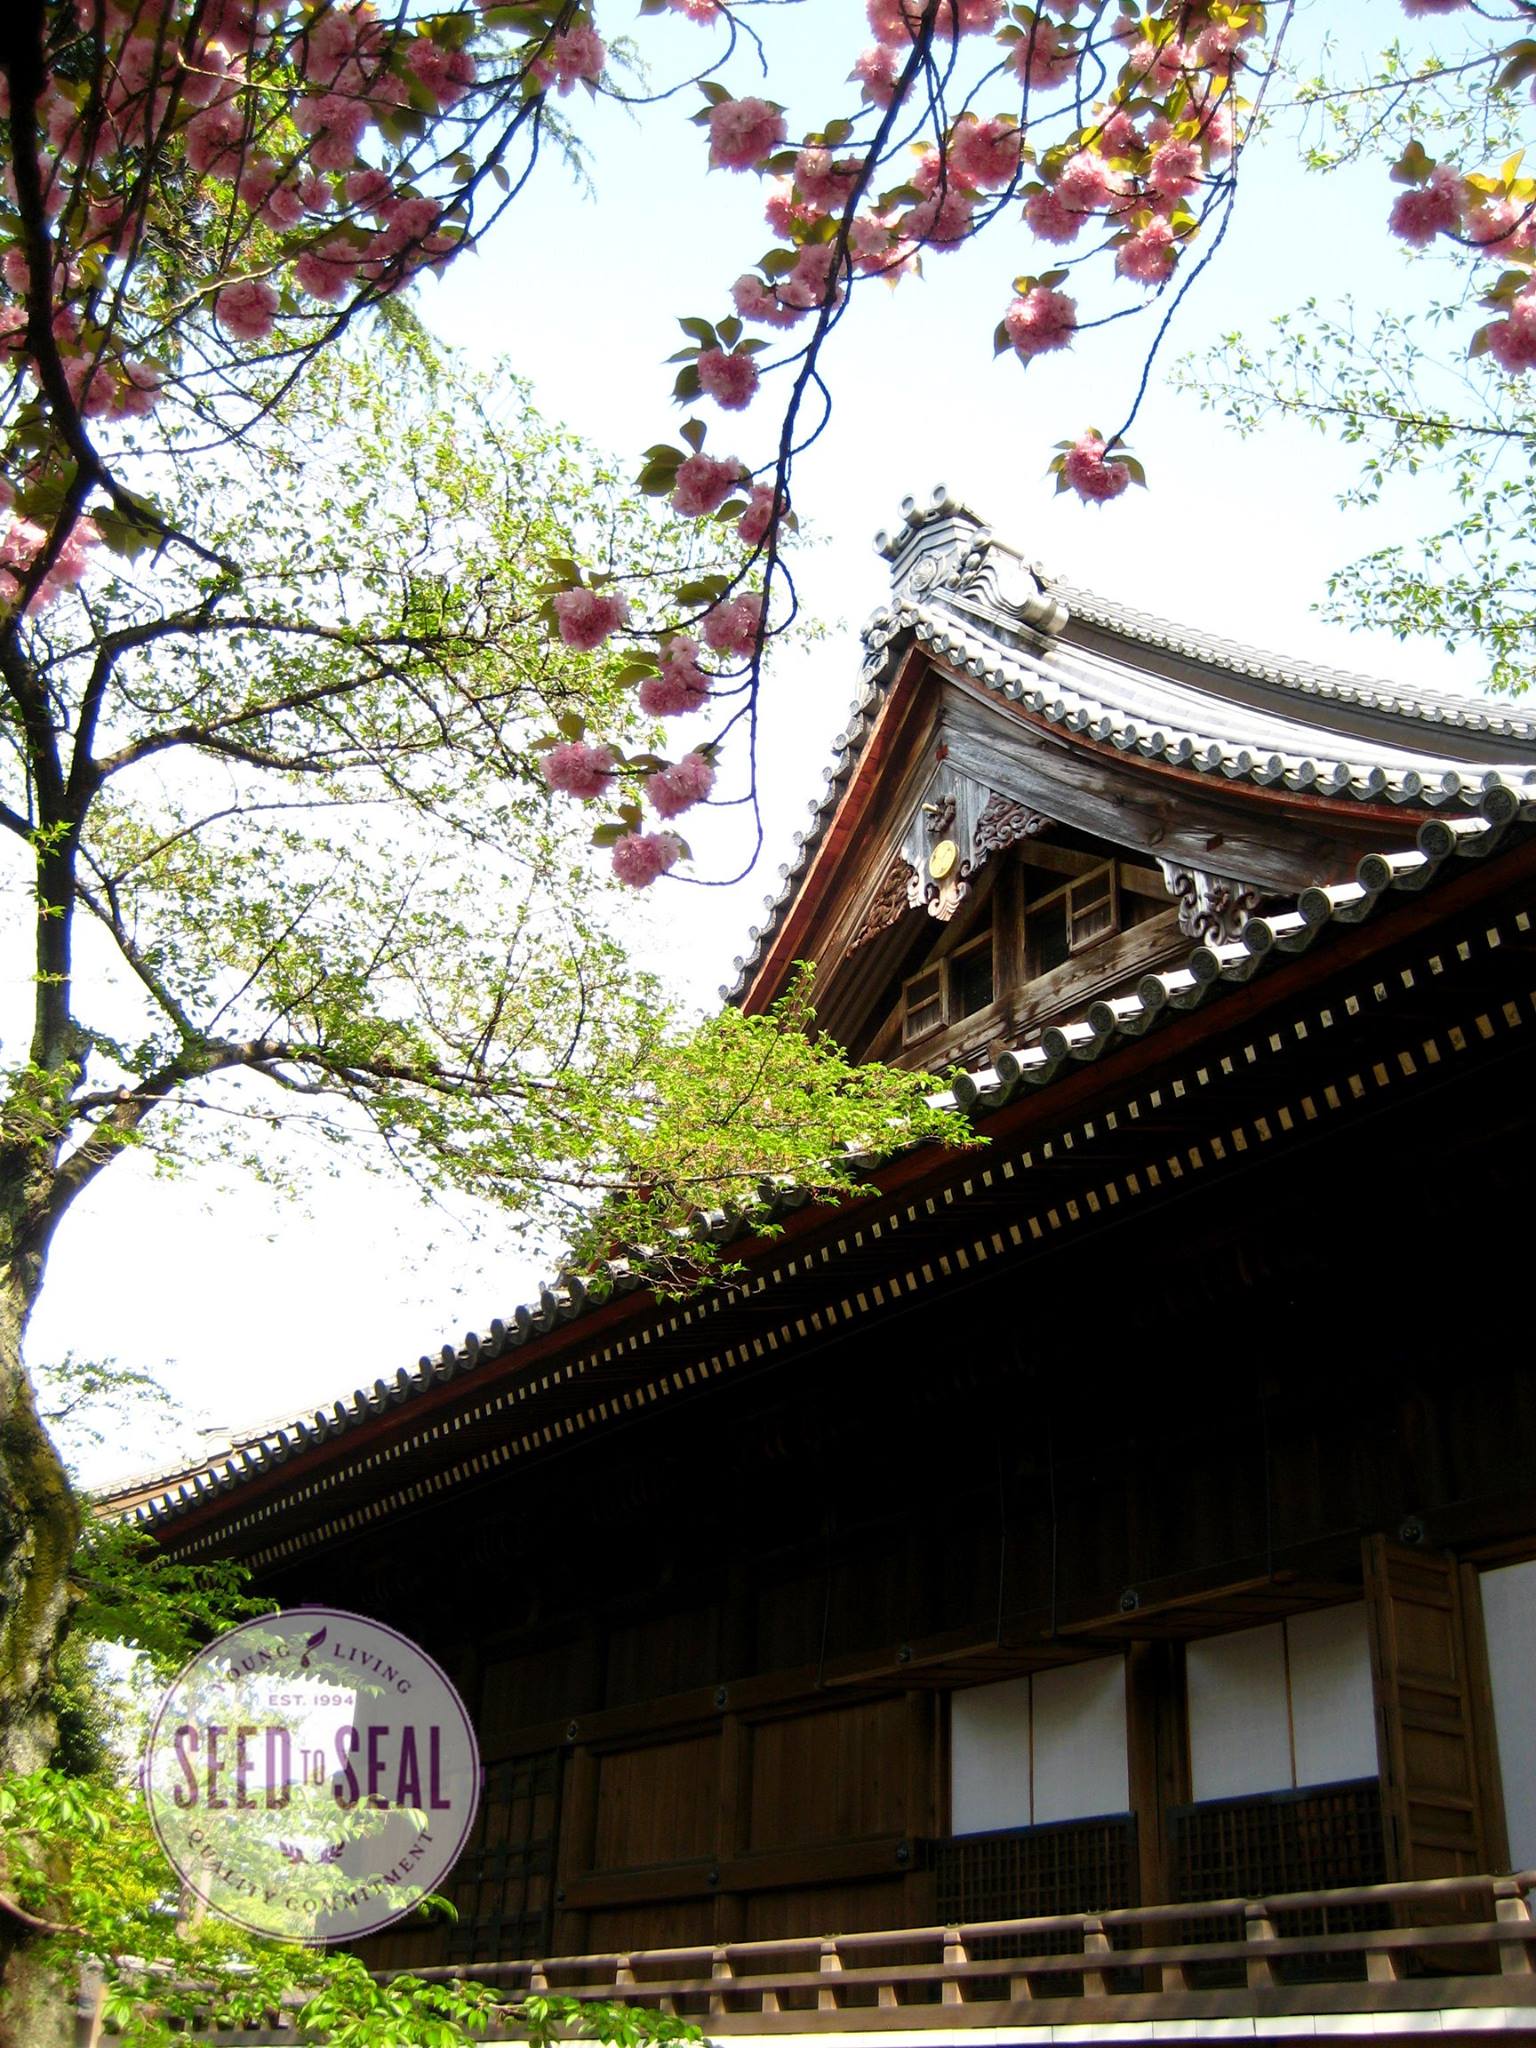 Temple made of Hinoki wood